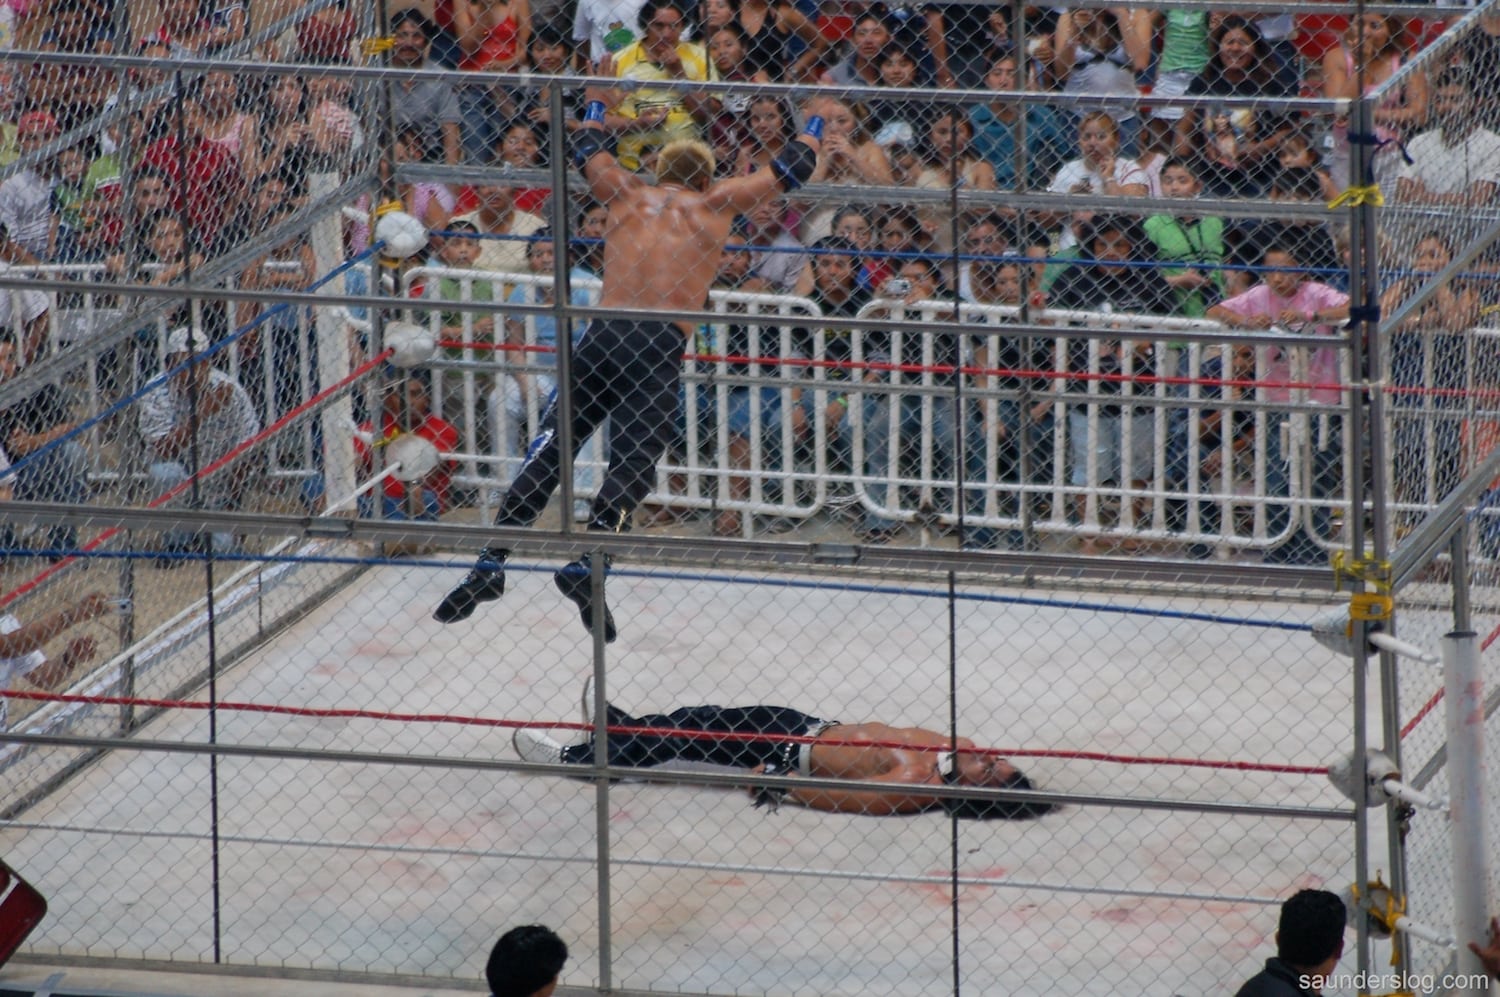 Cage match